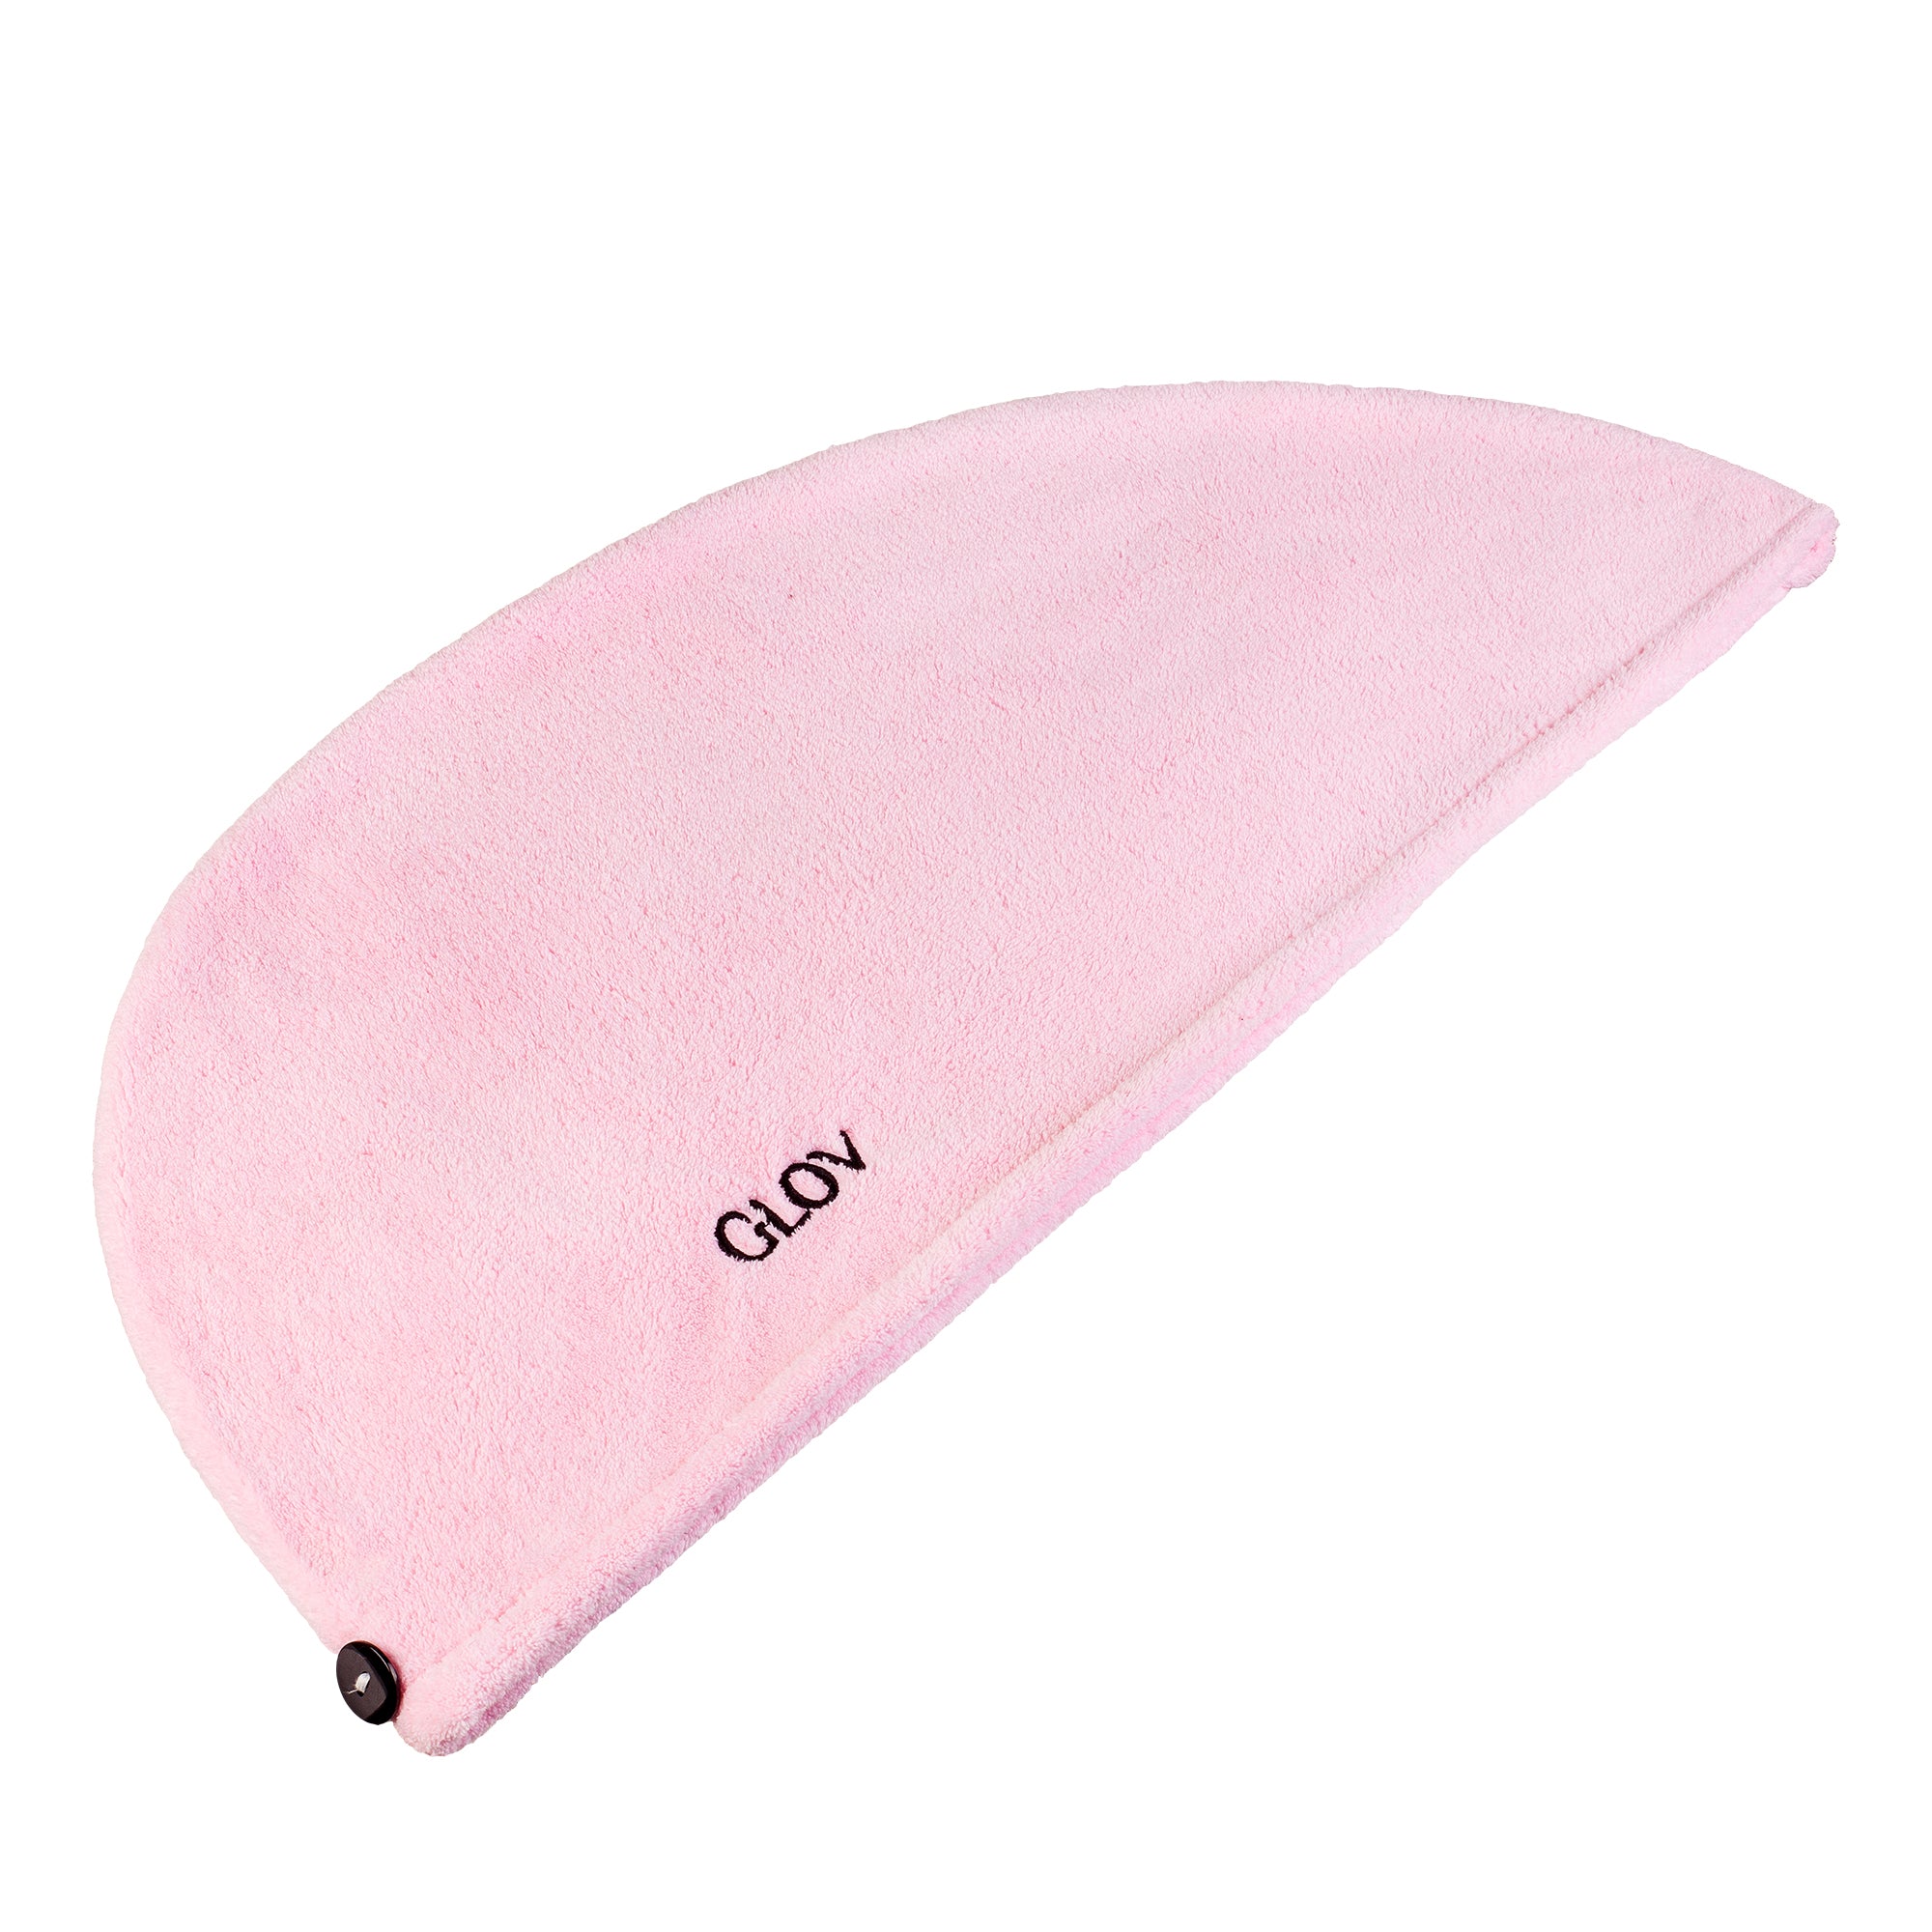 06. GLOV Hair Wrap Soft Pink